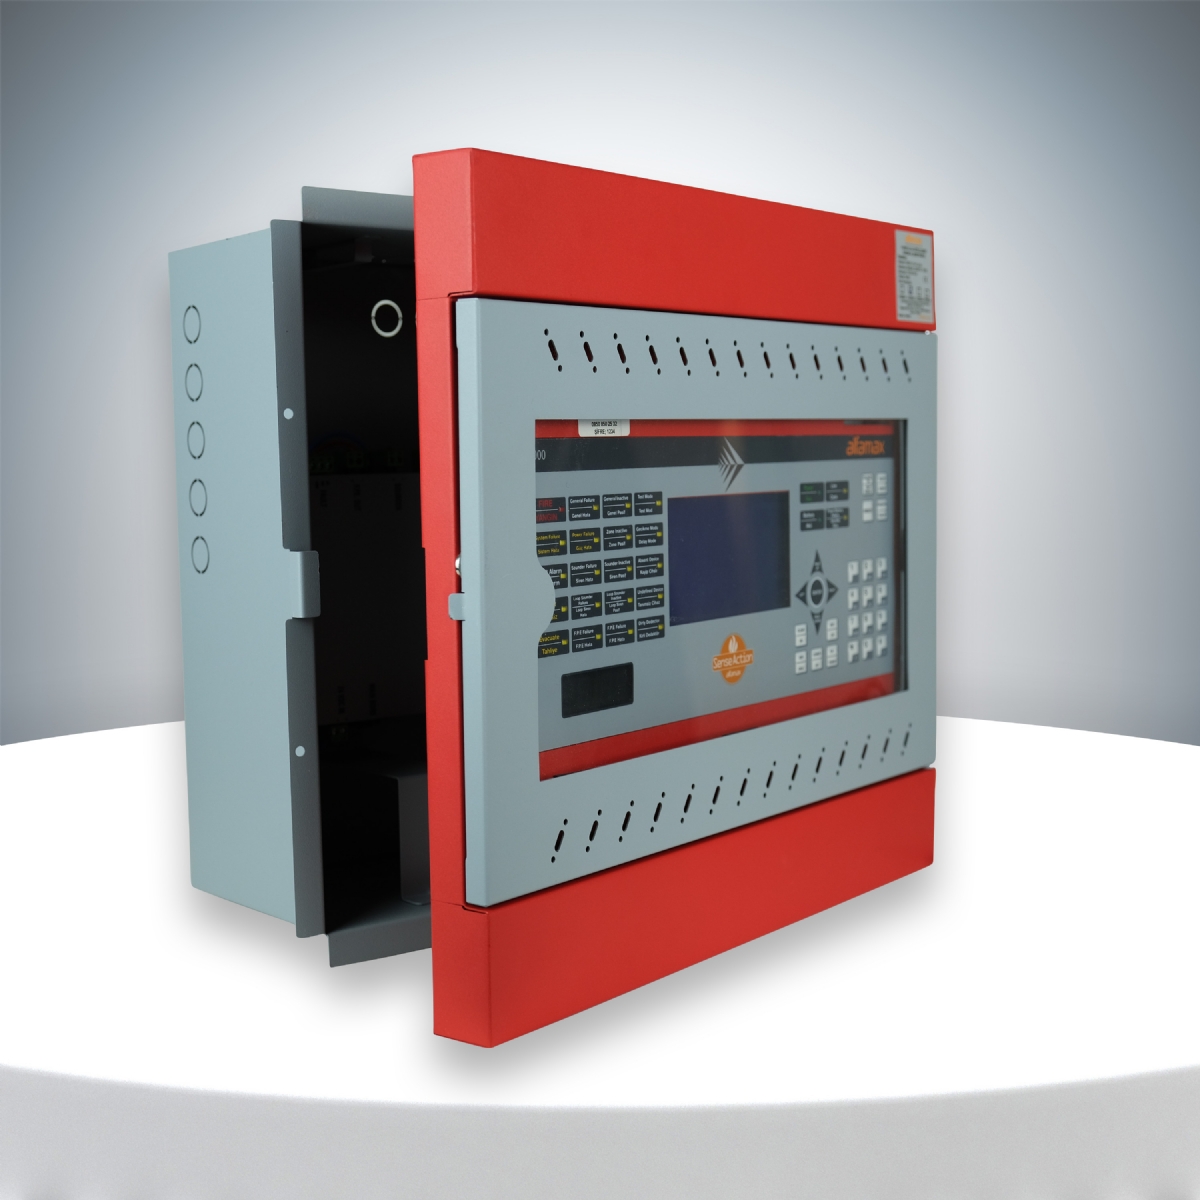 I-1000-4 2 Loop Addressable Fire Alarm Panel